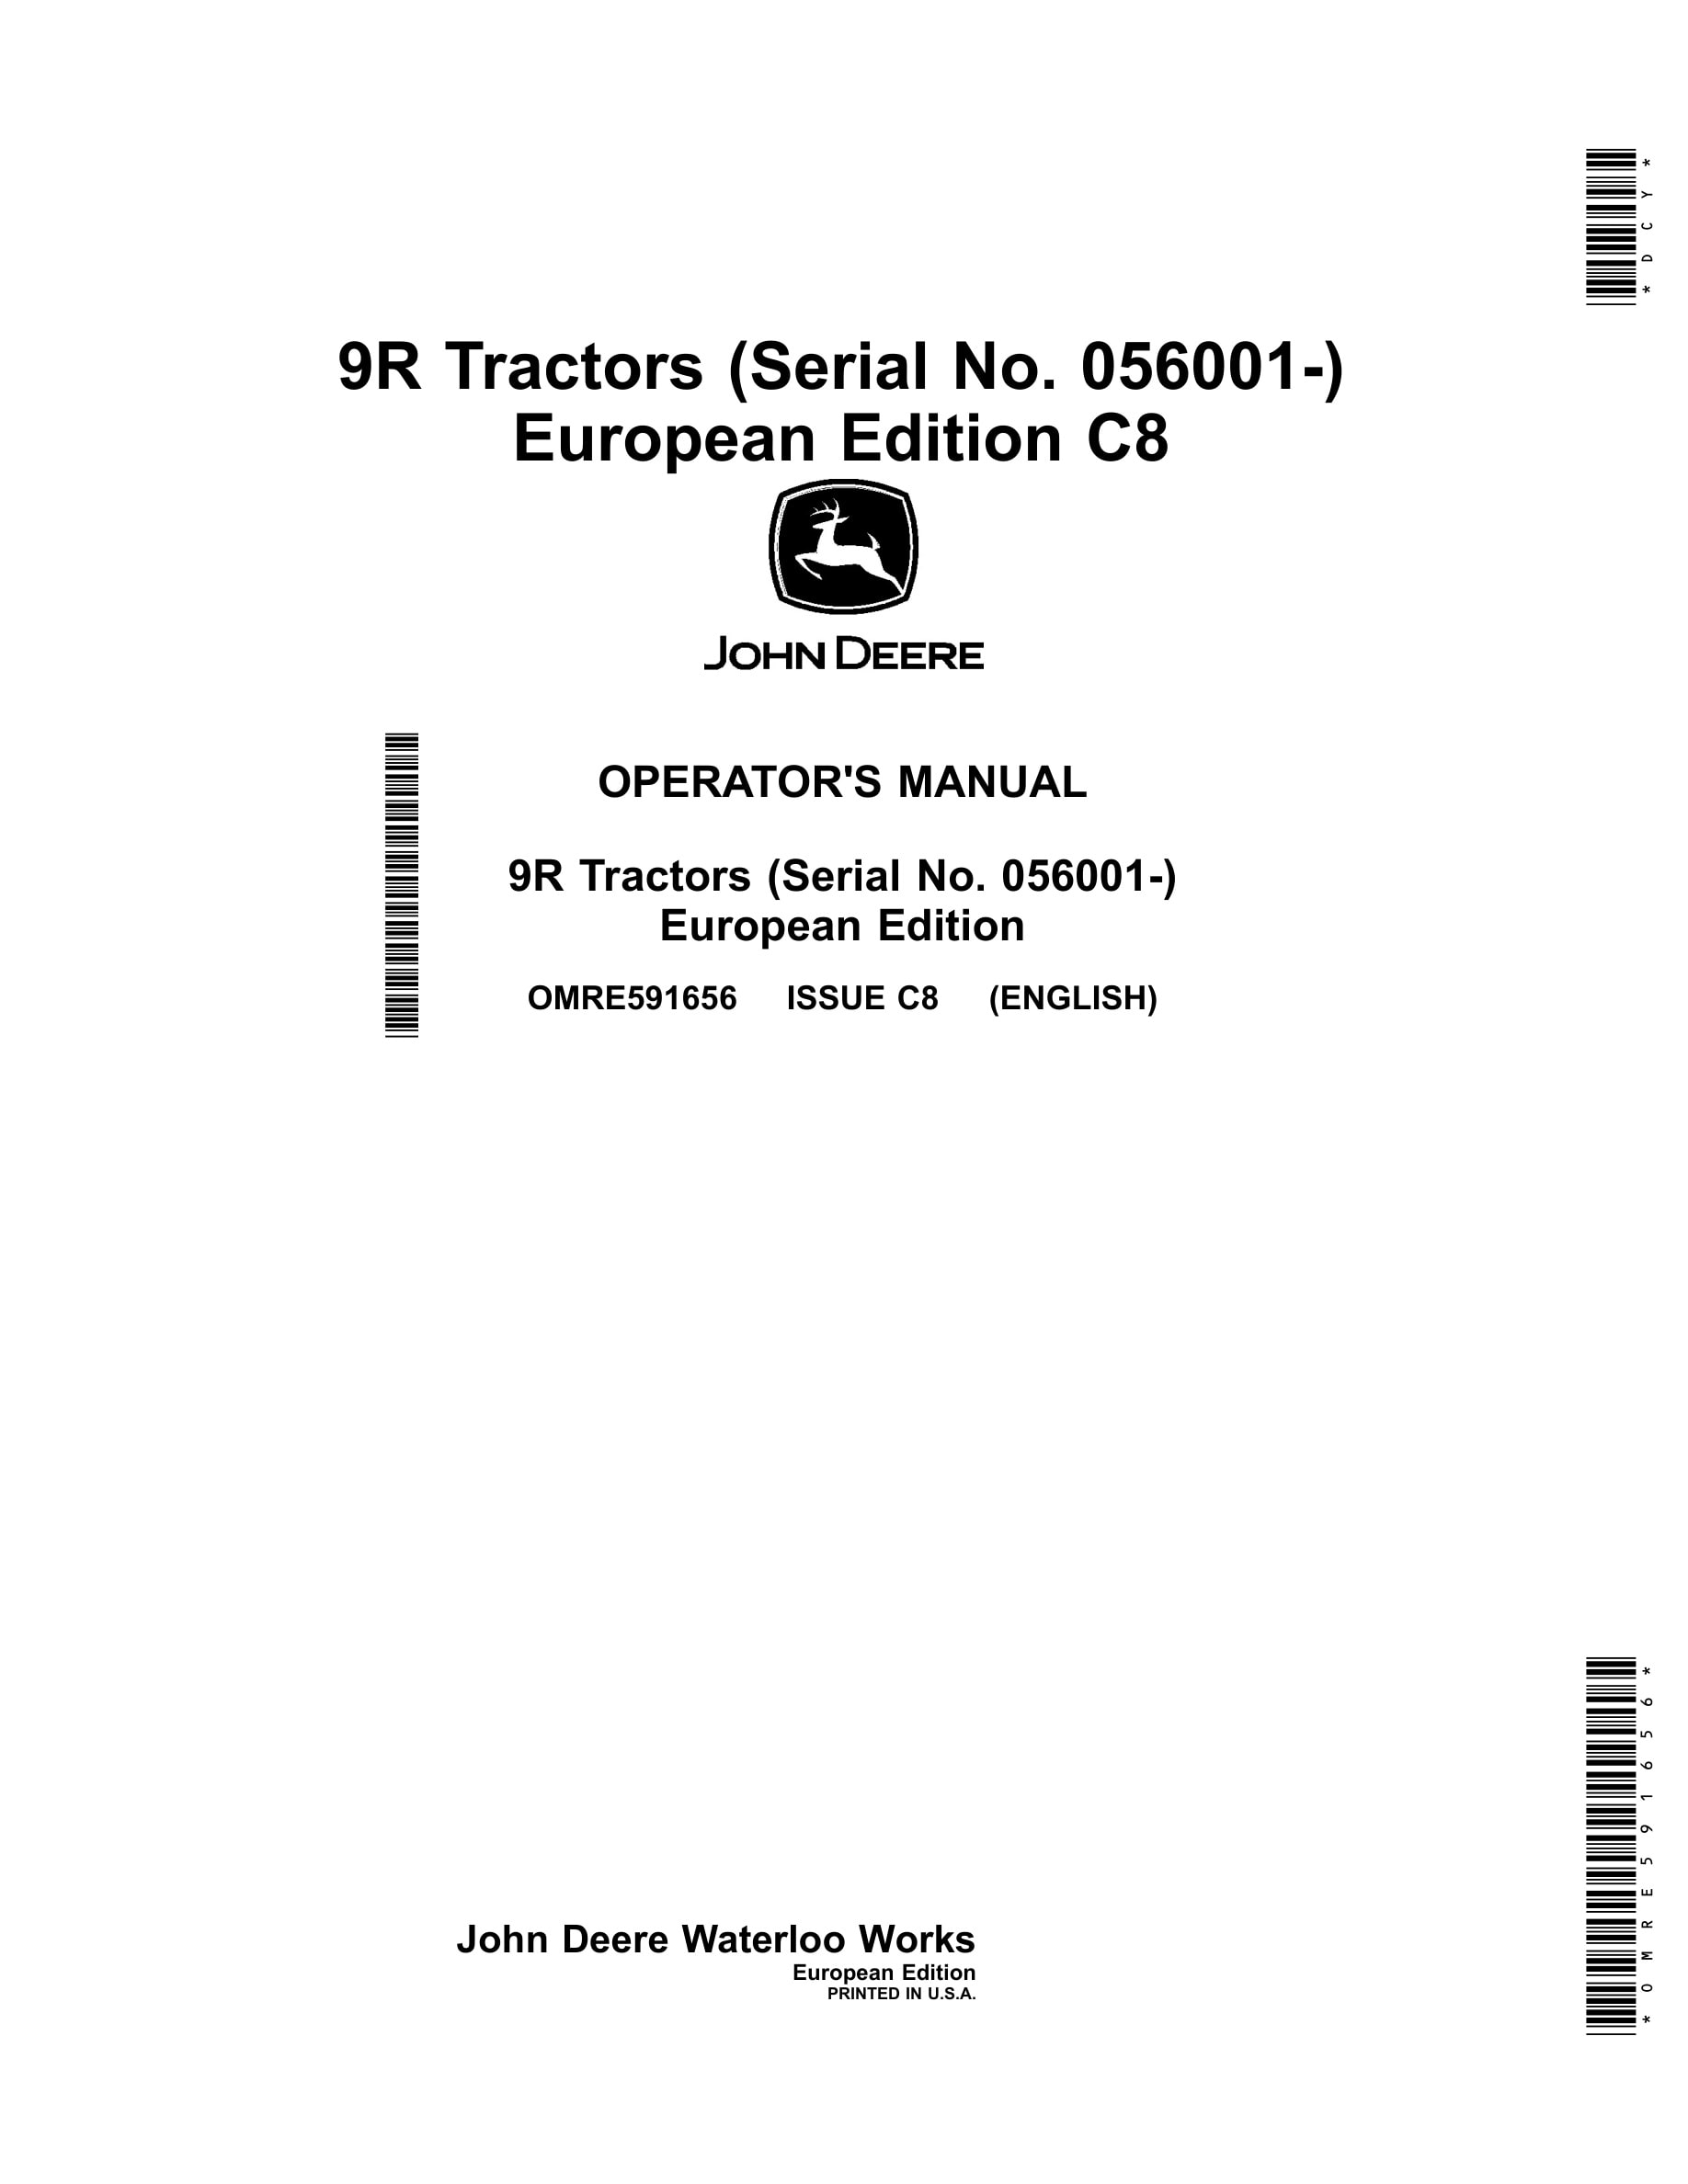 John Deere 9r Tractors Operator Manuals OMRE591656-1